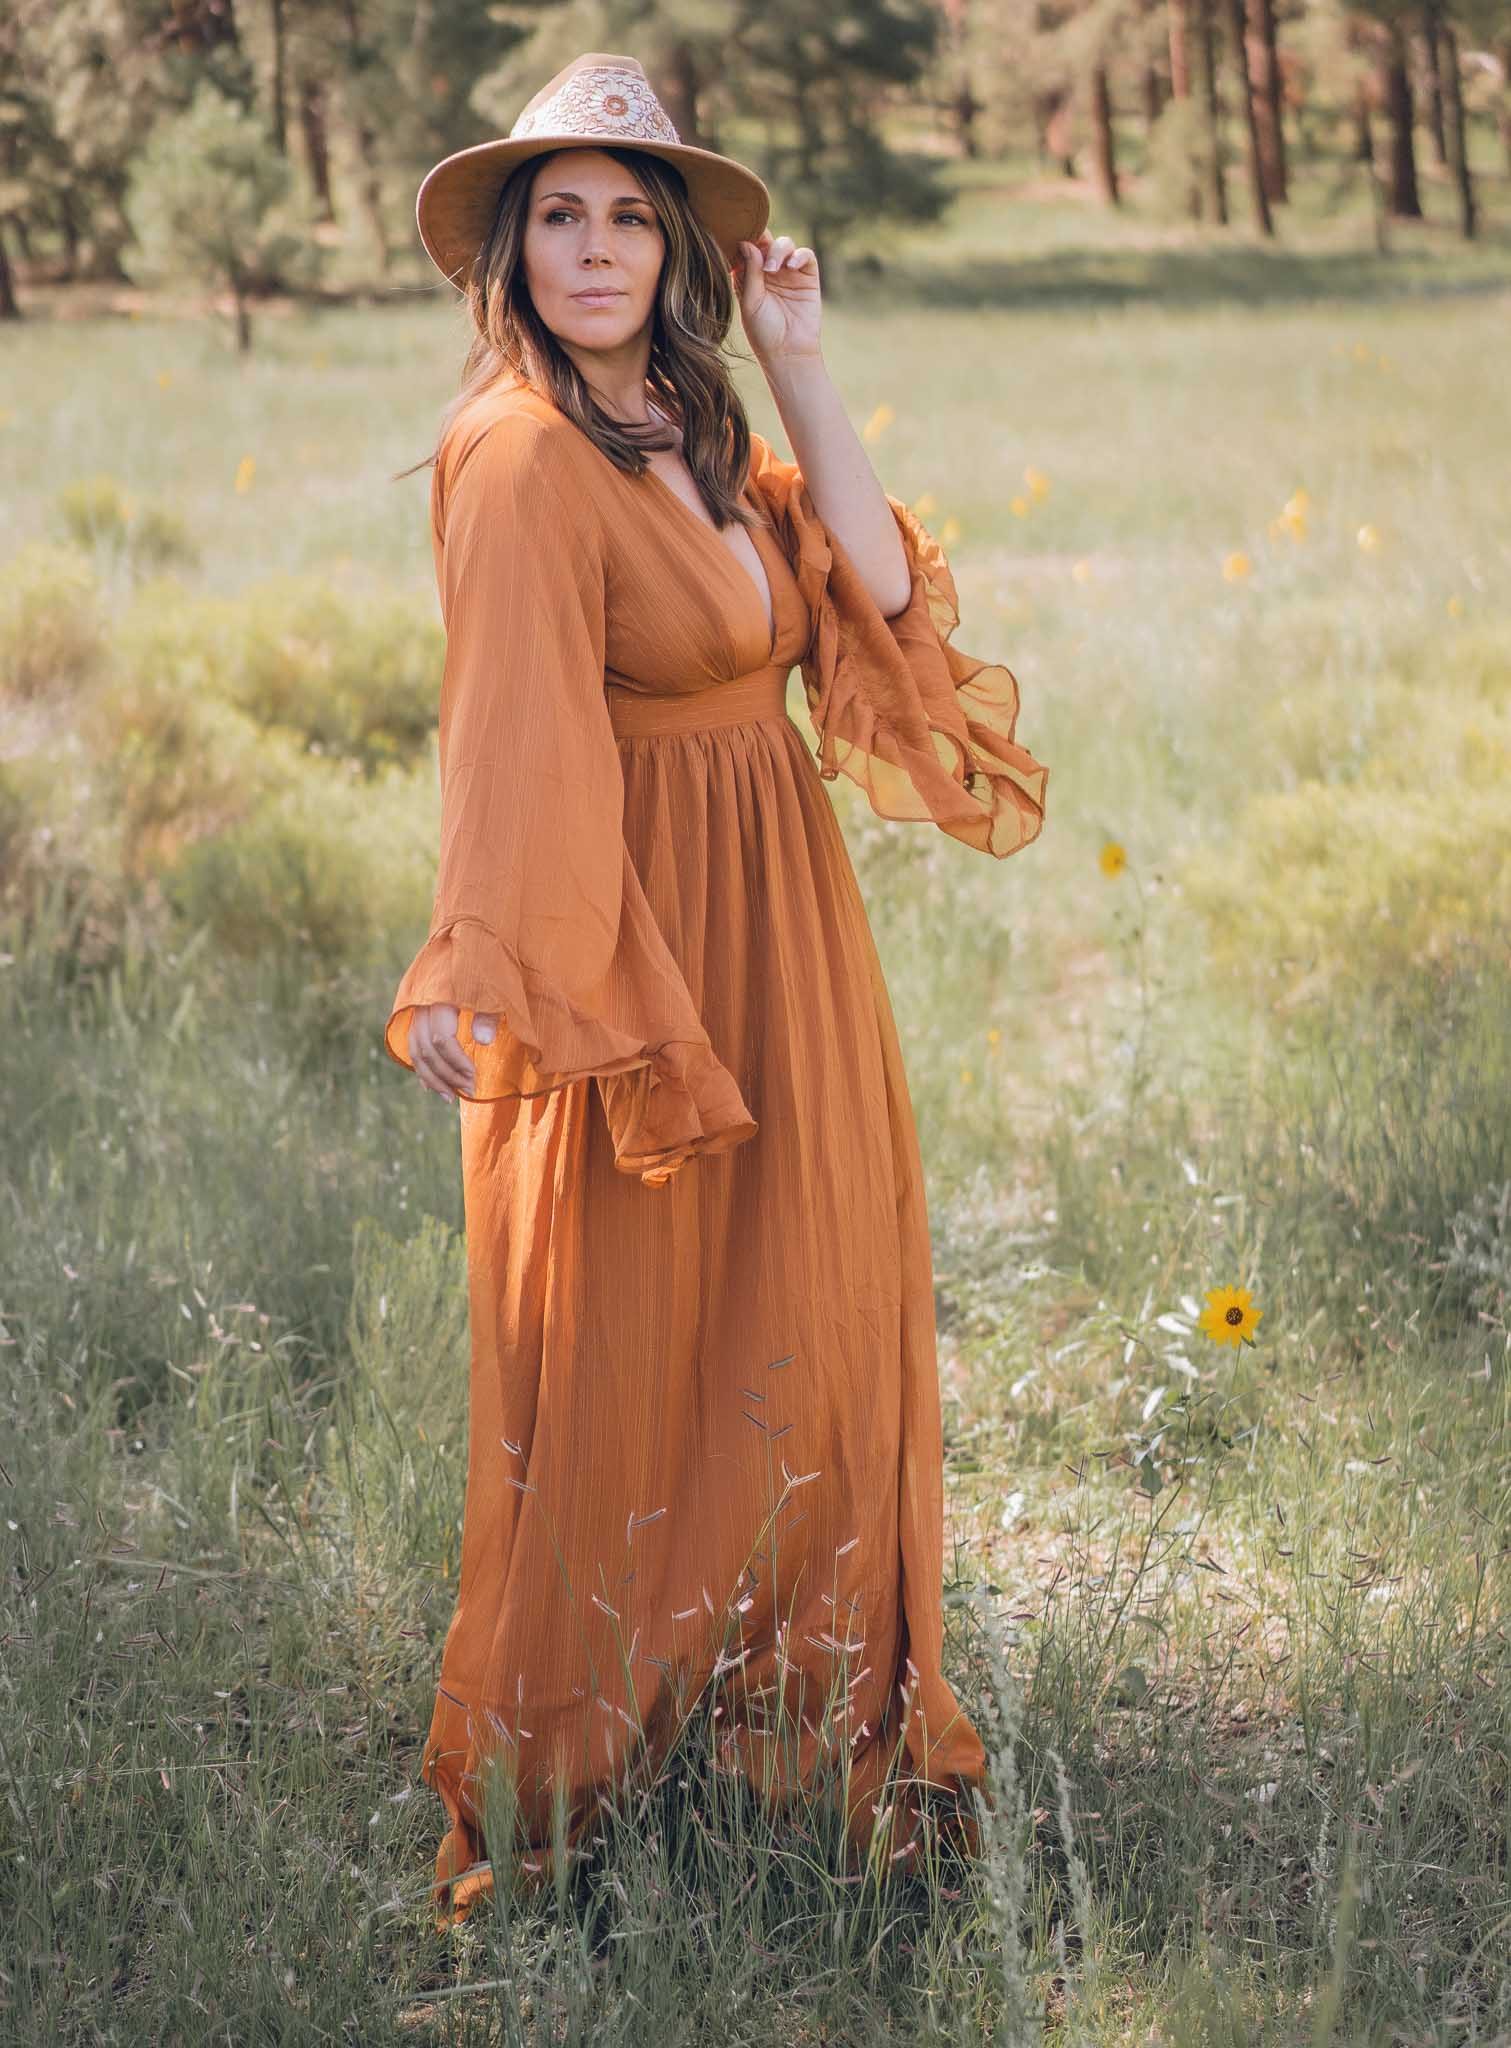 Taryn Shorr, a freelance travel writer, wearing an orange dress and a hat in a field